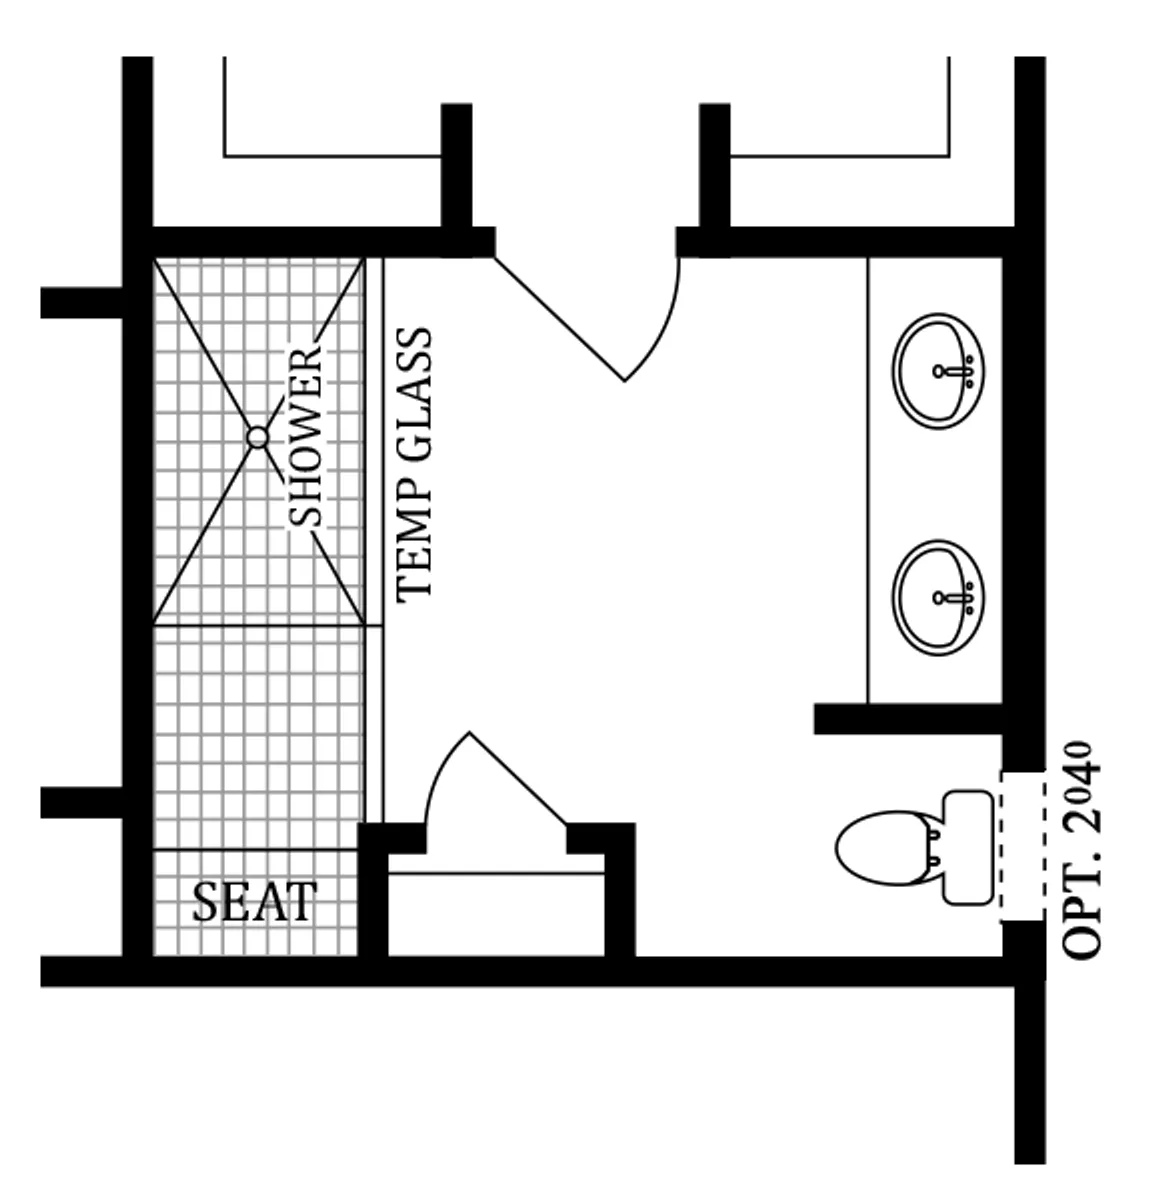 First Floor | Optional Roman Owner's Bath